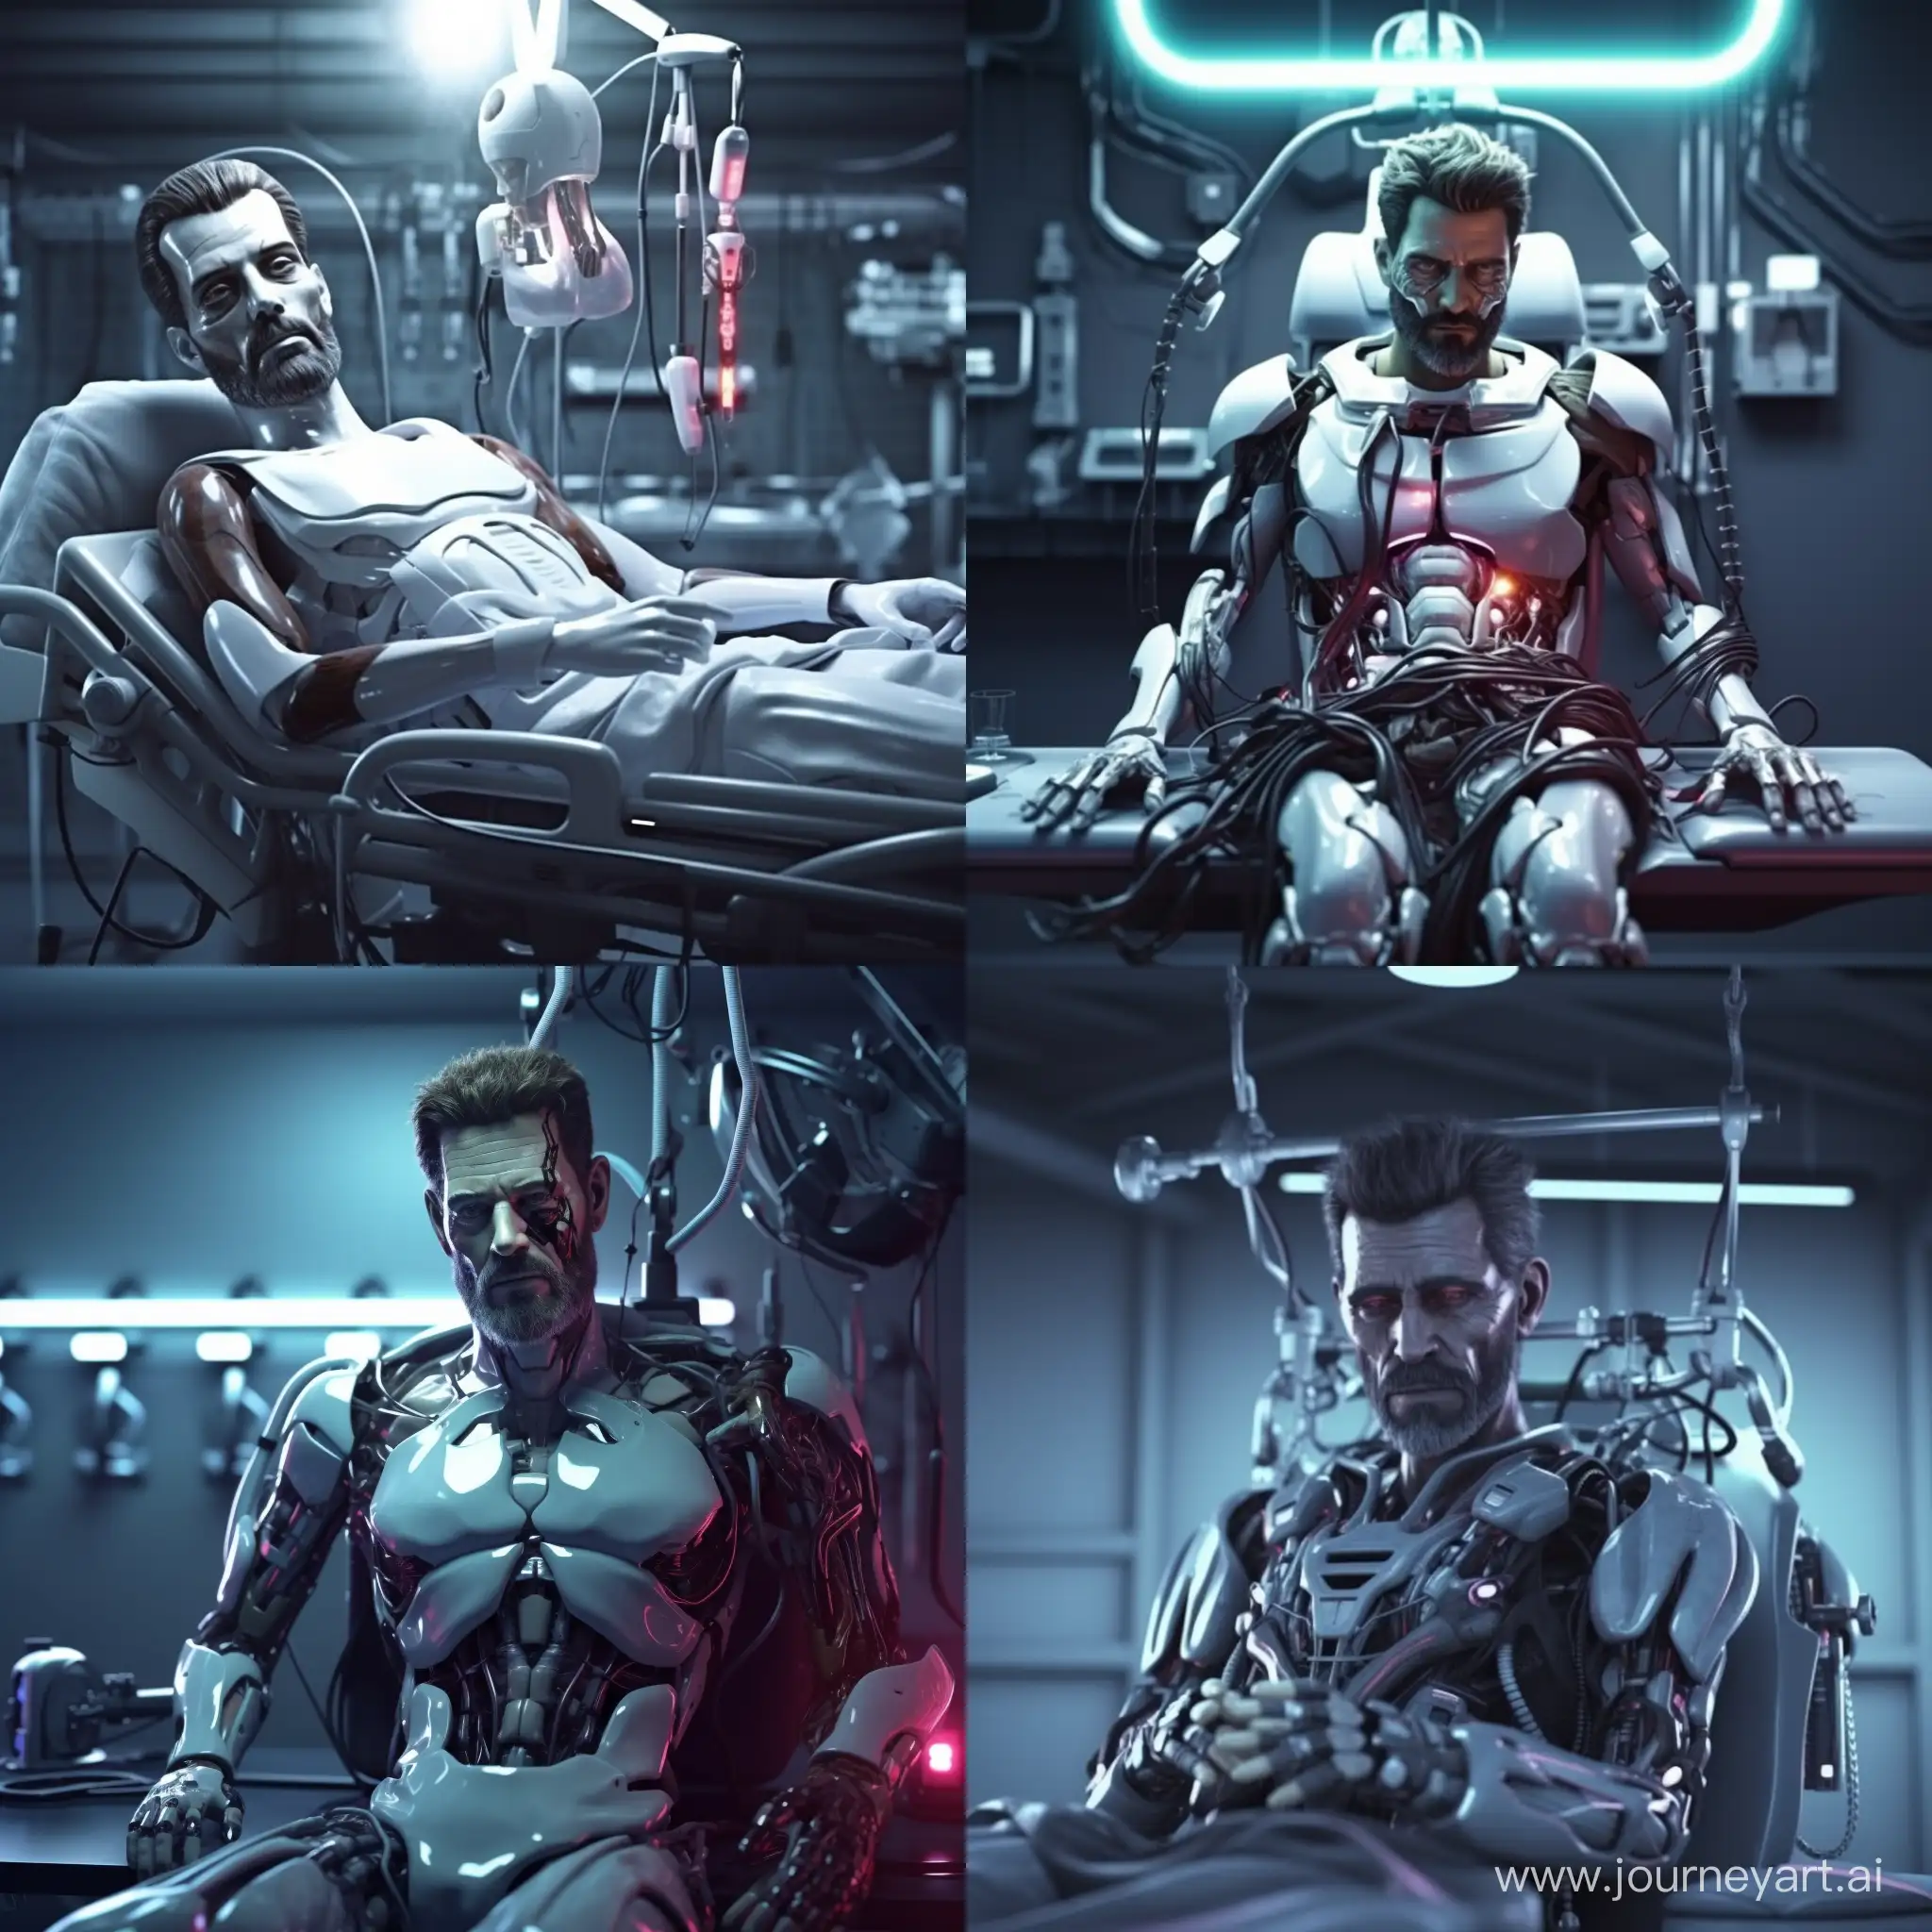 Futuristic-Cyberpunk-Robotic-Surgeon-Operating-Greek-God-in-Realistic-4K